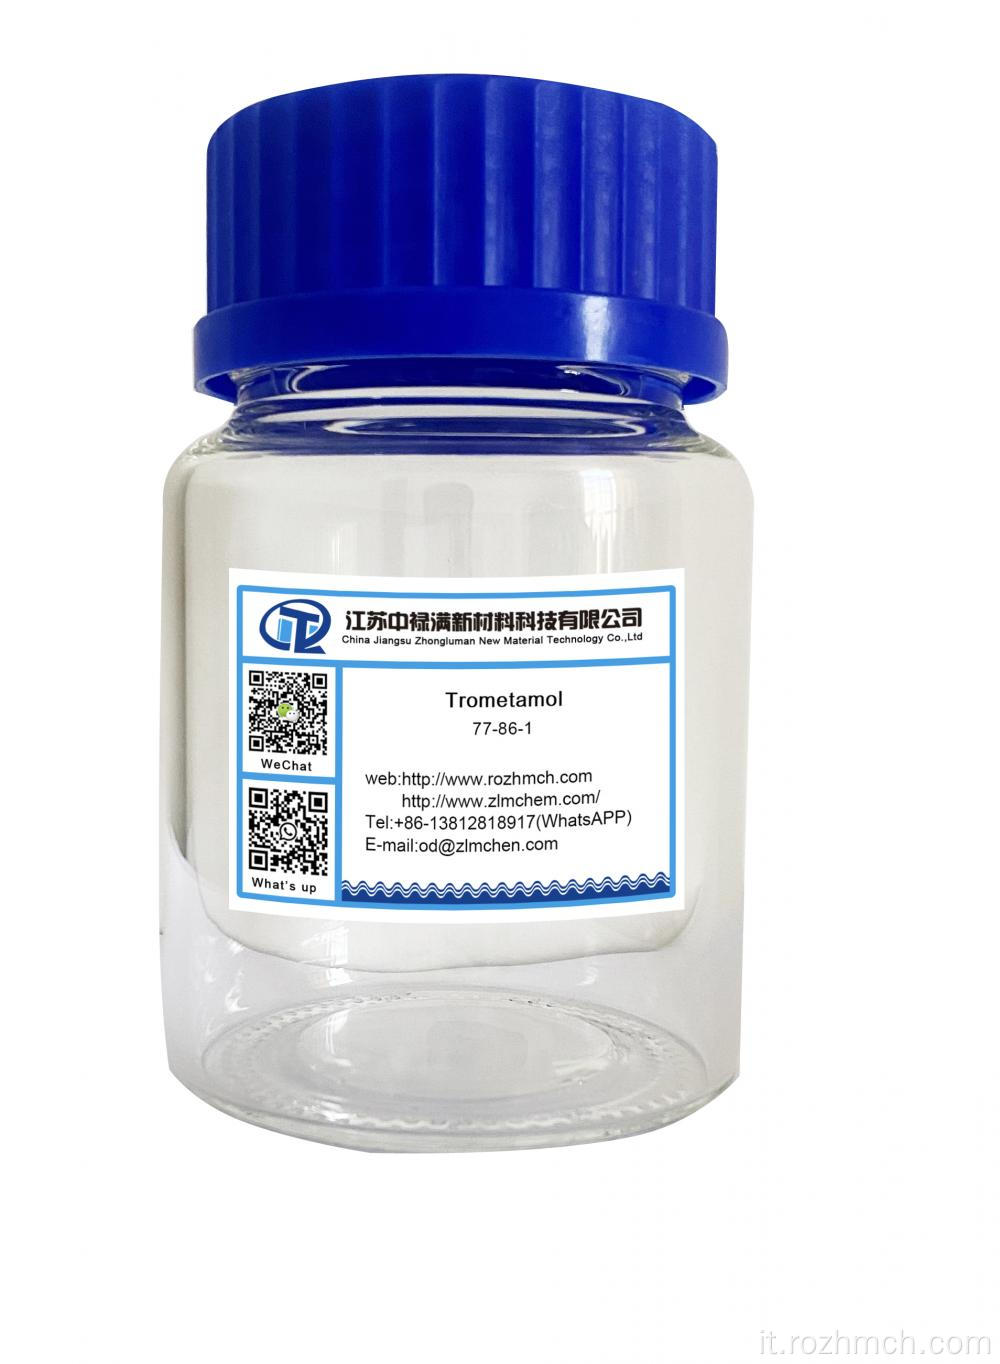 Trometamol Tris CAS n. 77-86-1